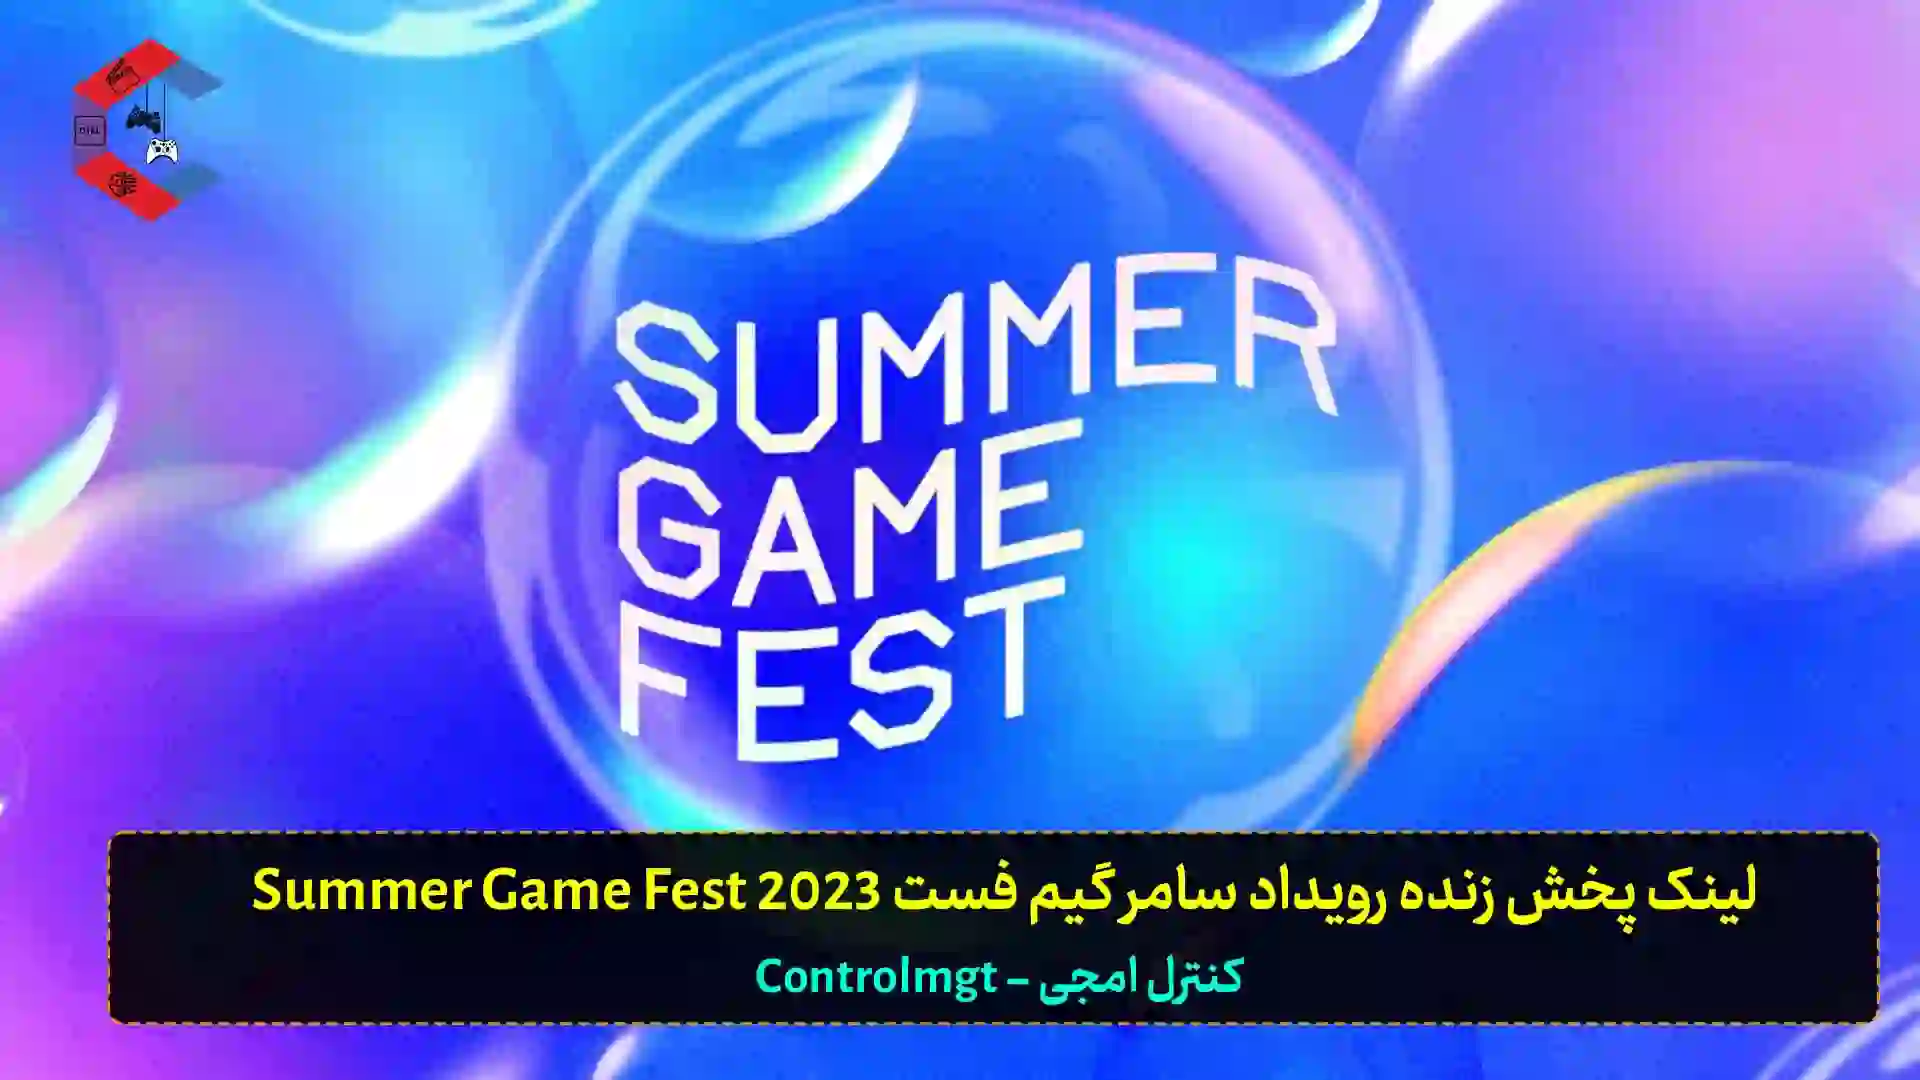 لینک پخش زنده رویداد سامر گیم فست Summer Game Fest 2023